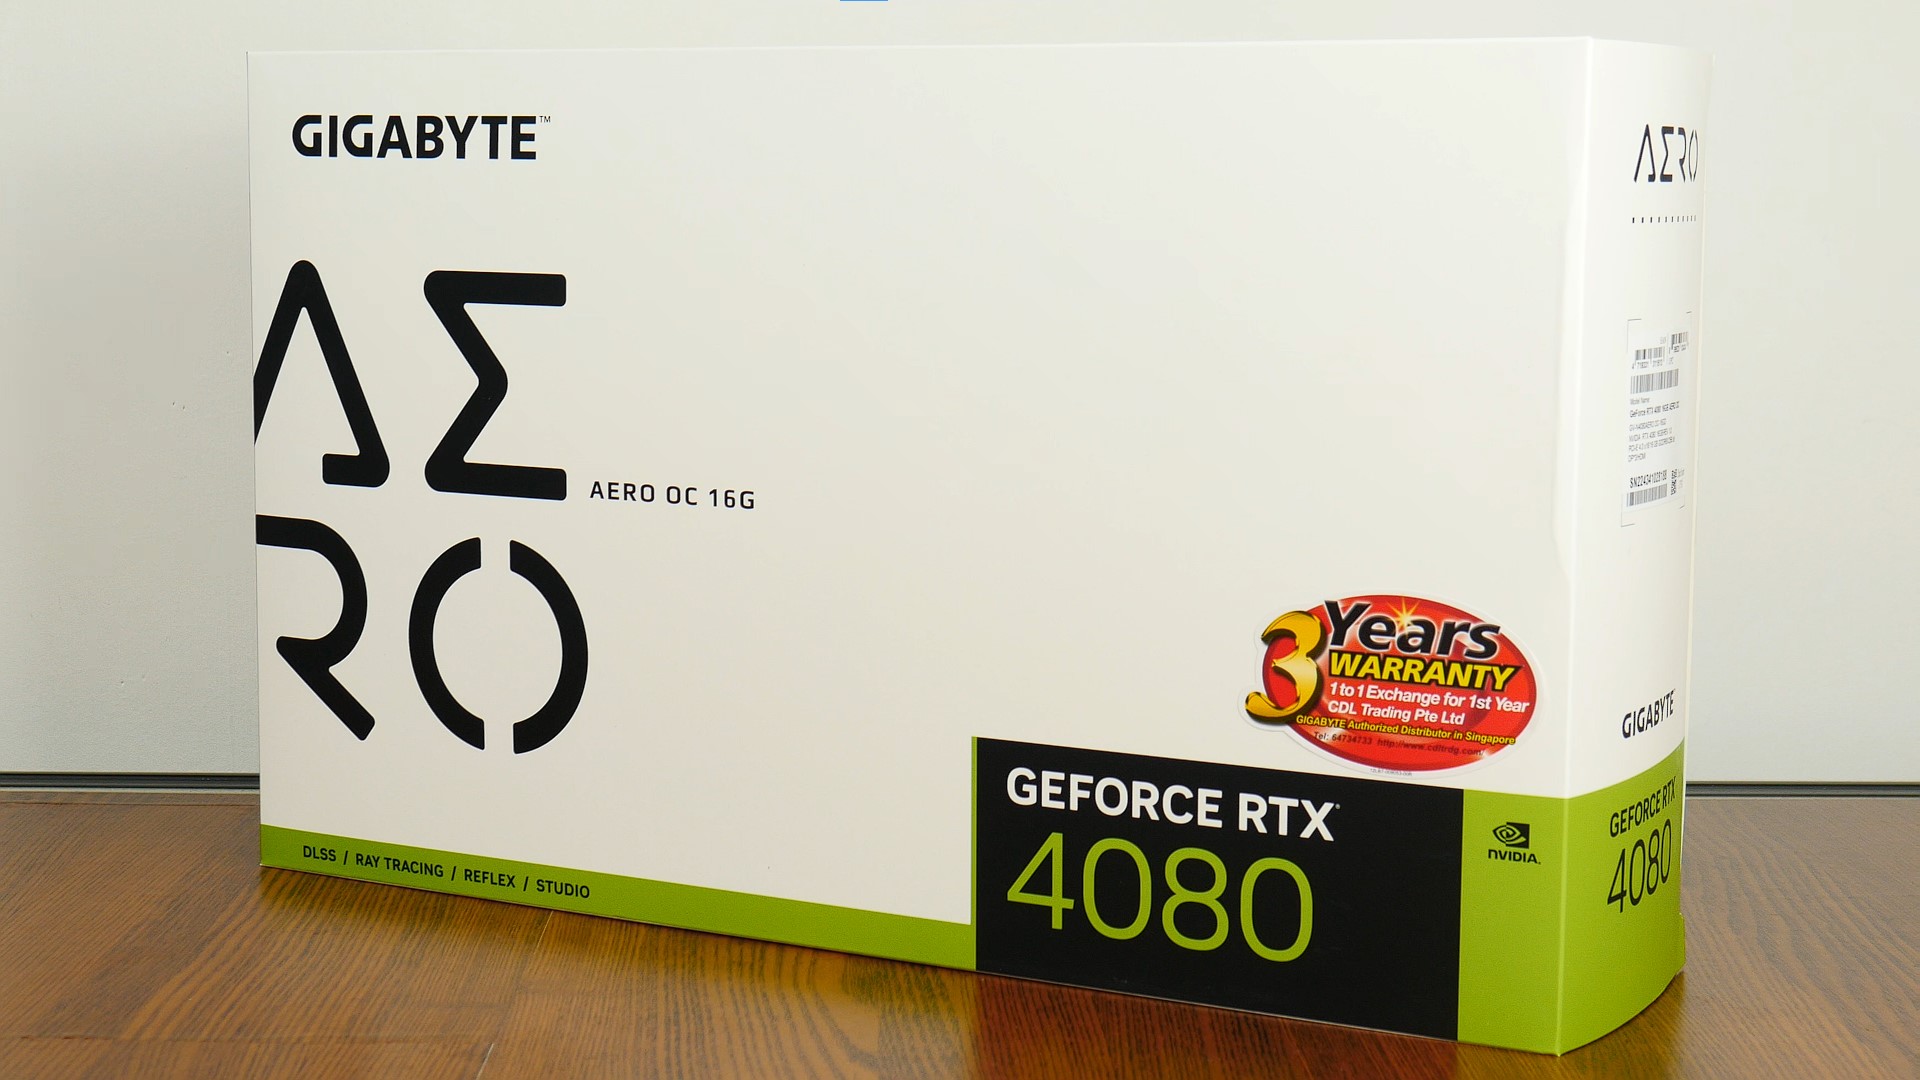 Best Buy: GIGABYTE NVIDIA GeForce RTX 4080 Aero OC 16GB GDDR6X PCI Express  4.0 Graphics Card White GV-N4080AERO OC-16GD